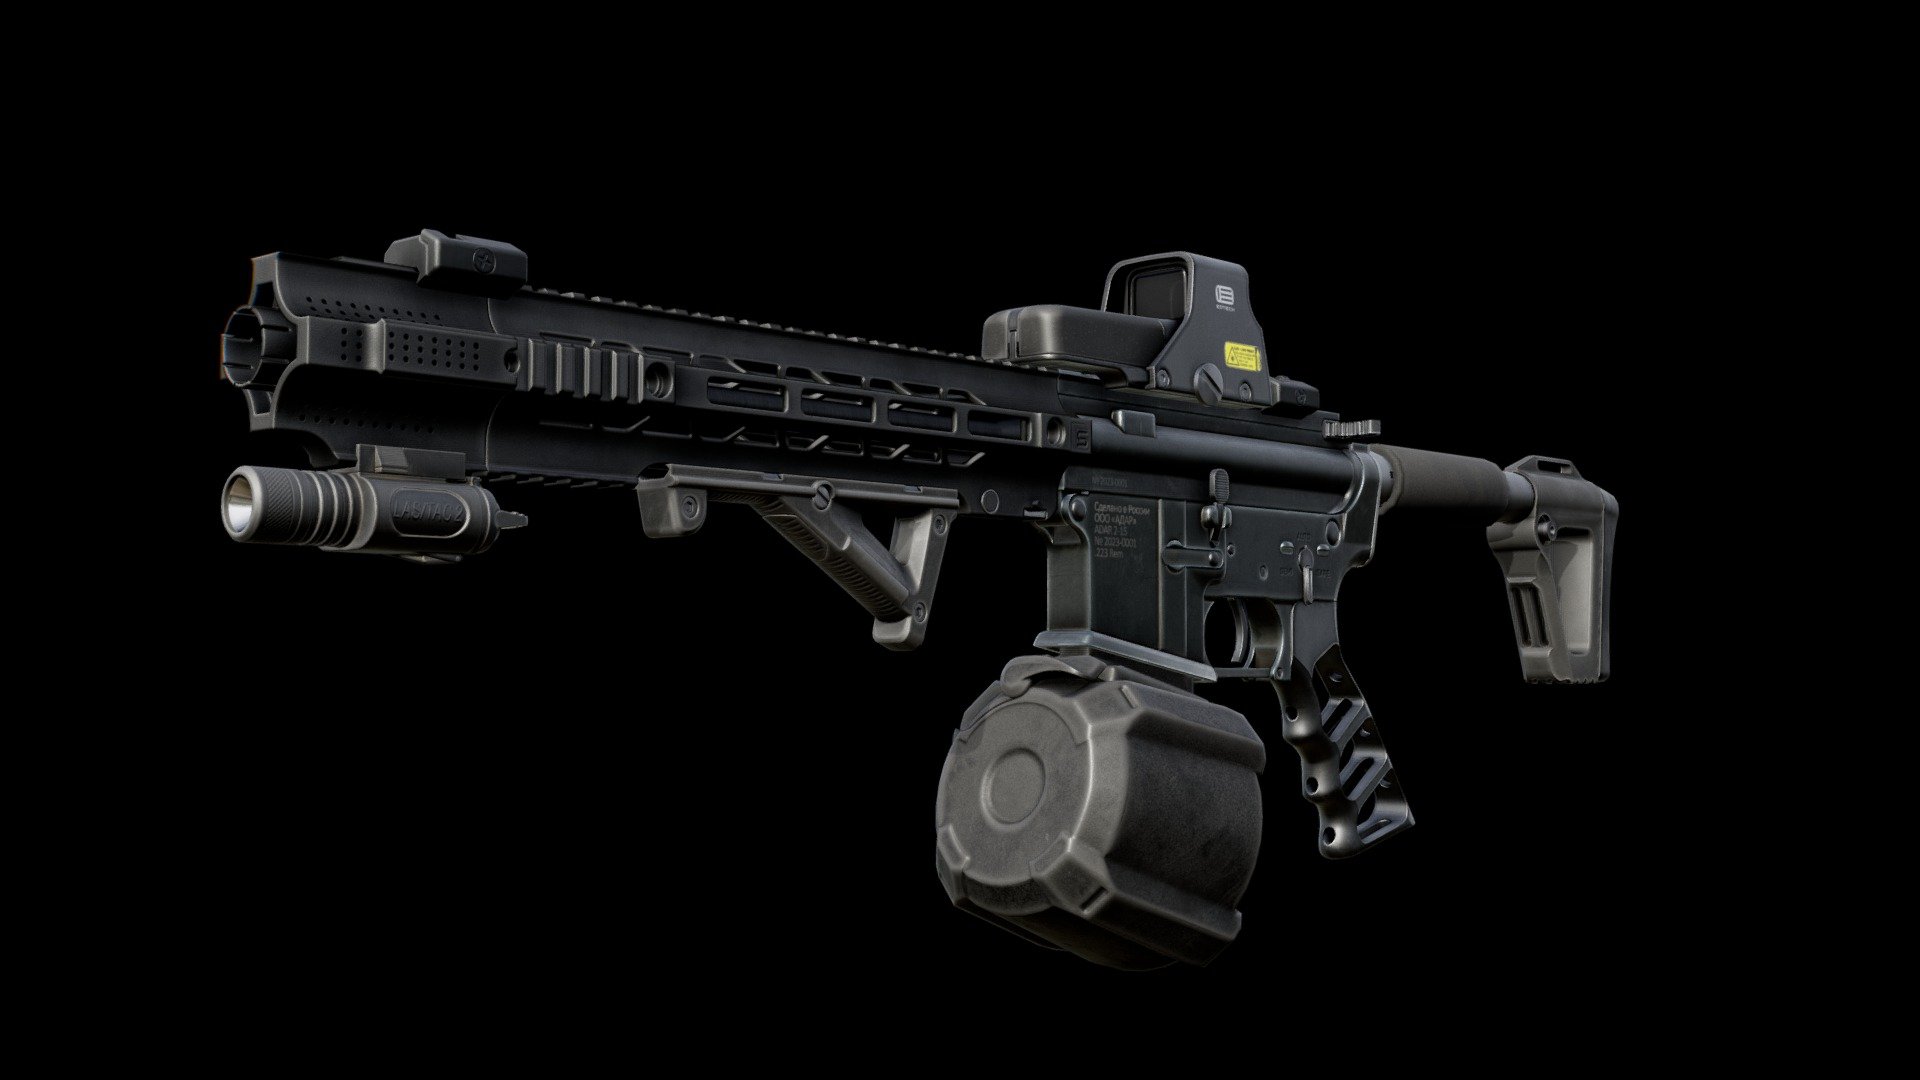 AR-15 TARKOV VIBES aKa M4A1 SAI:
ADAR 2-15 5.56x45 carbine ✓
EOTech 553 holographic sight ✓
Double Star Ace Socom gen.4 stock ✓
Raptor charging handle ✓
SAI 10